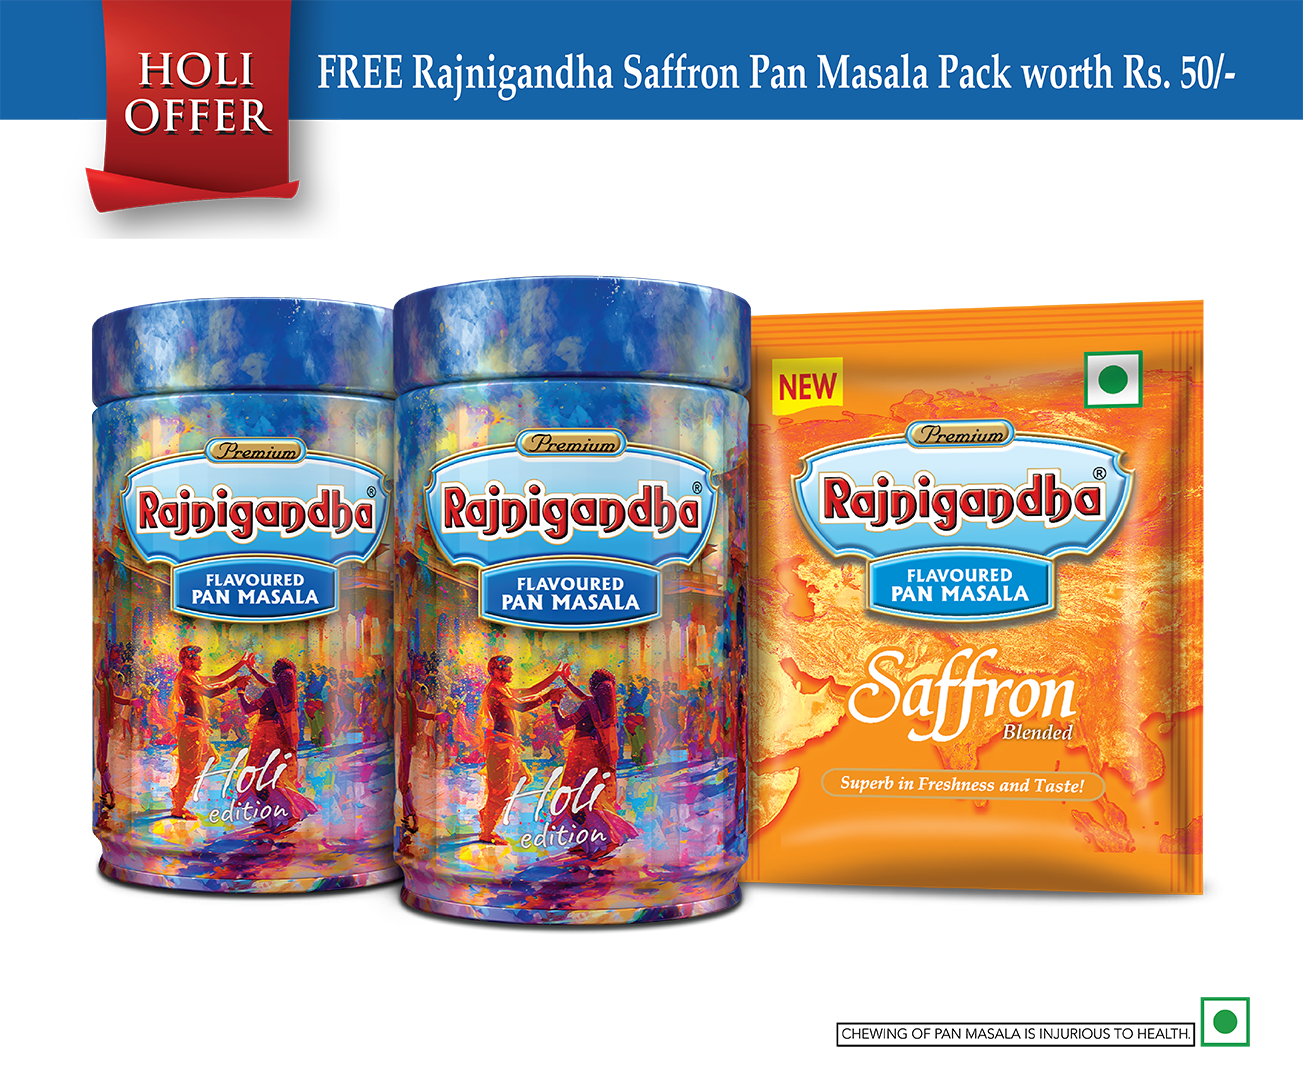 Rajnigandha ₹350.00 (Holi) 100g Twin pack